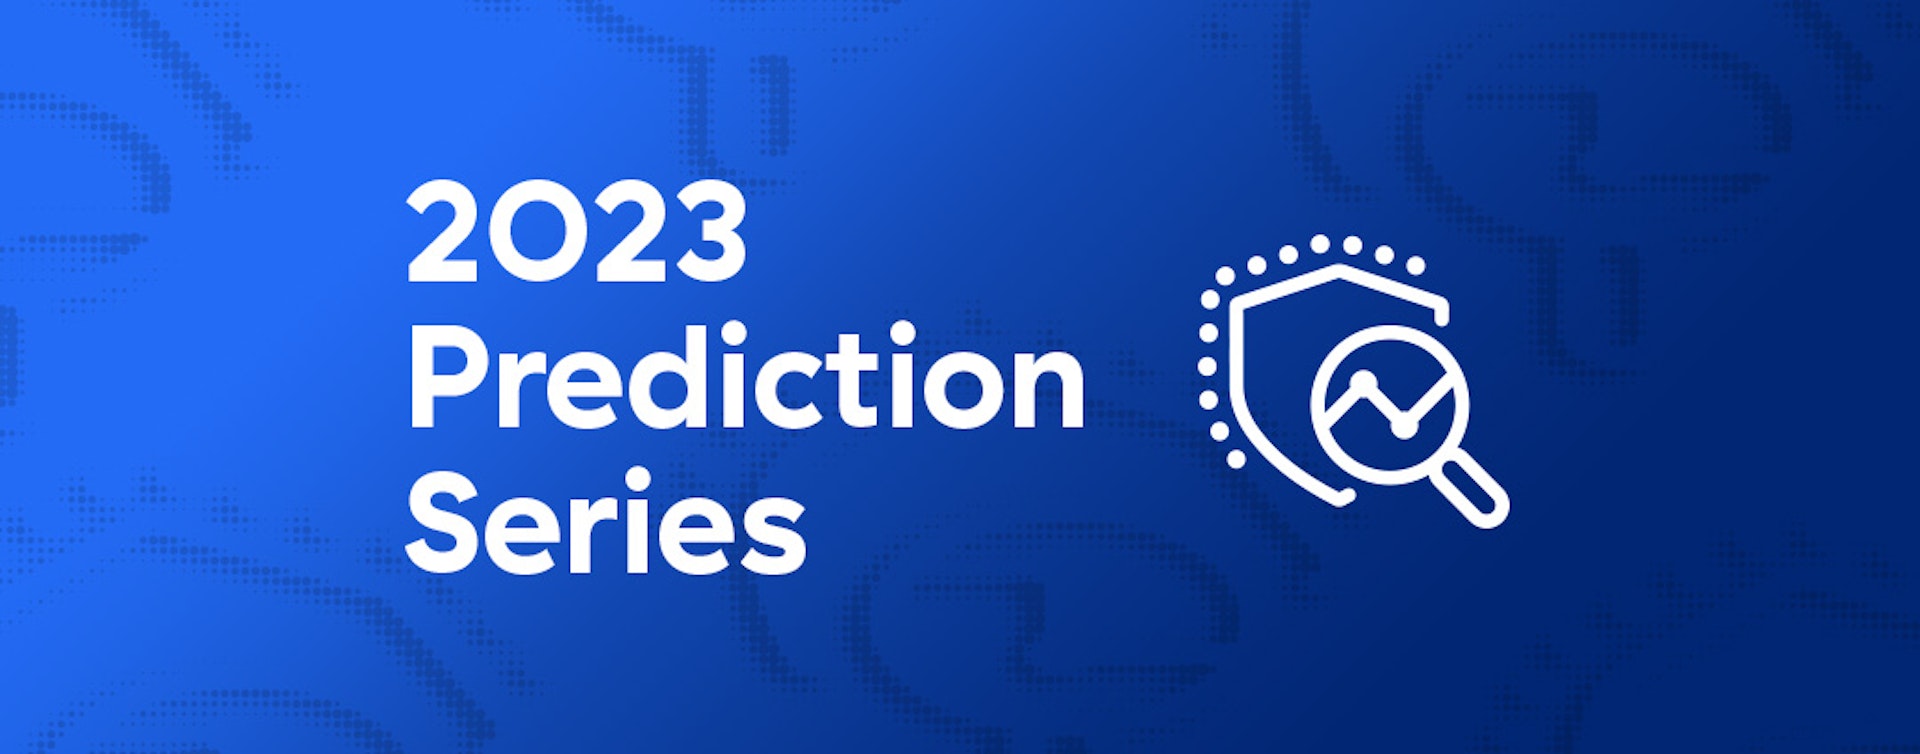 Enterprise Security Predictions for 2023